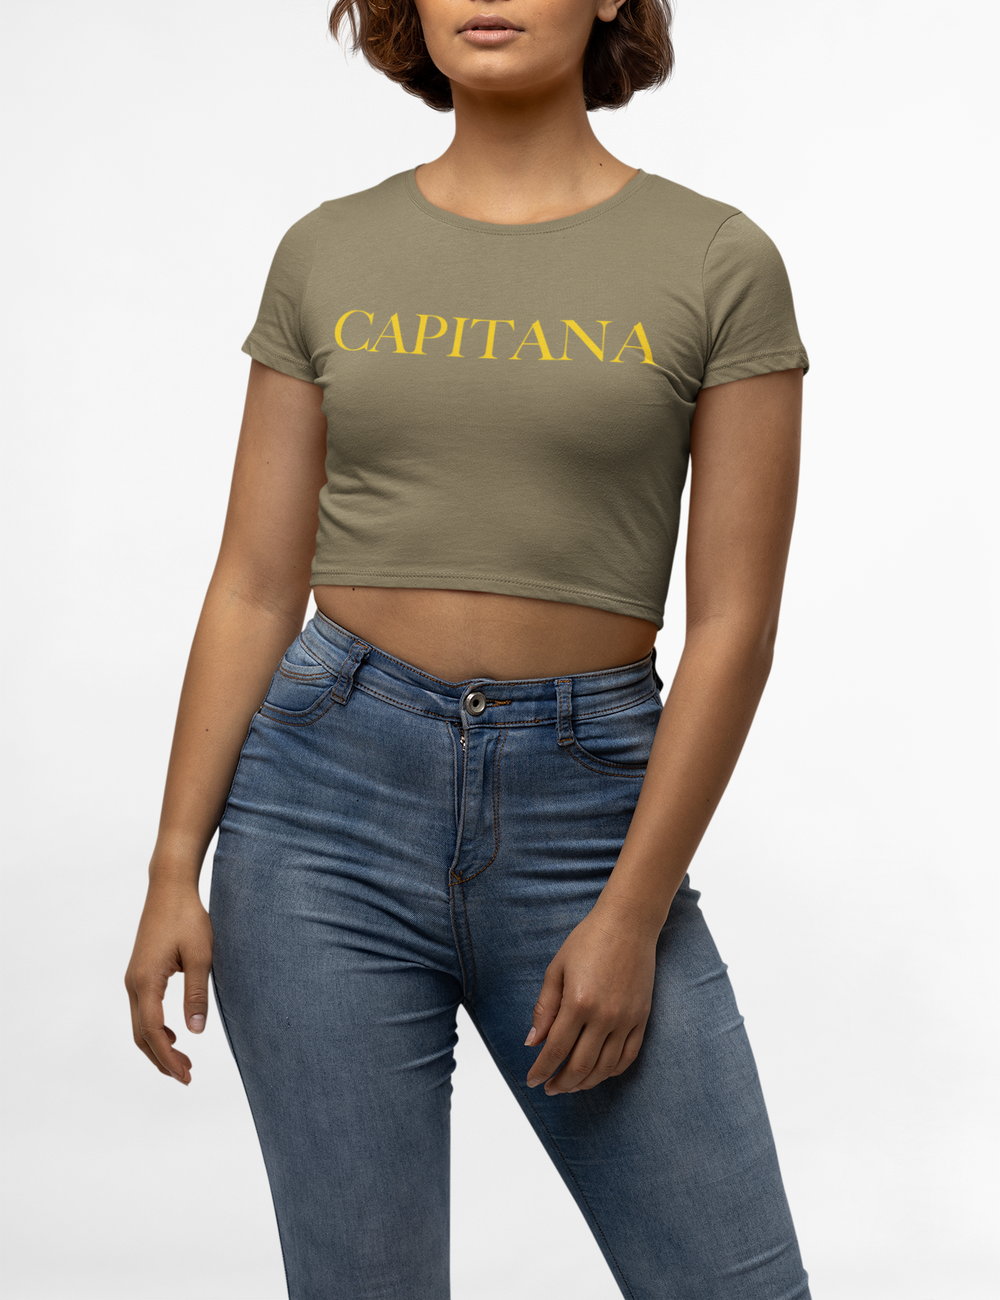 Capitana | Women's Fitted Crop Top T-Shirt OniTakai